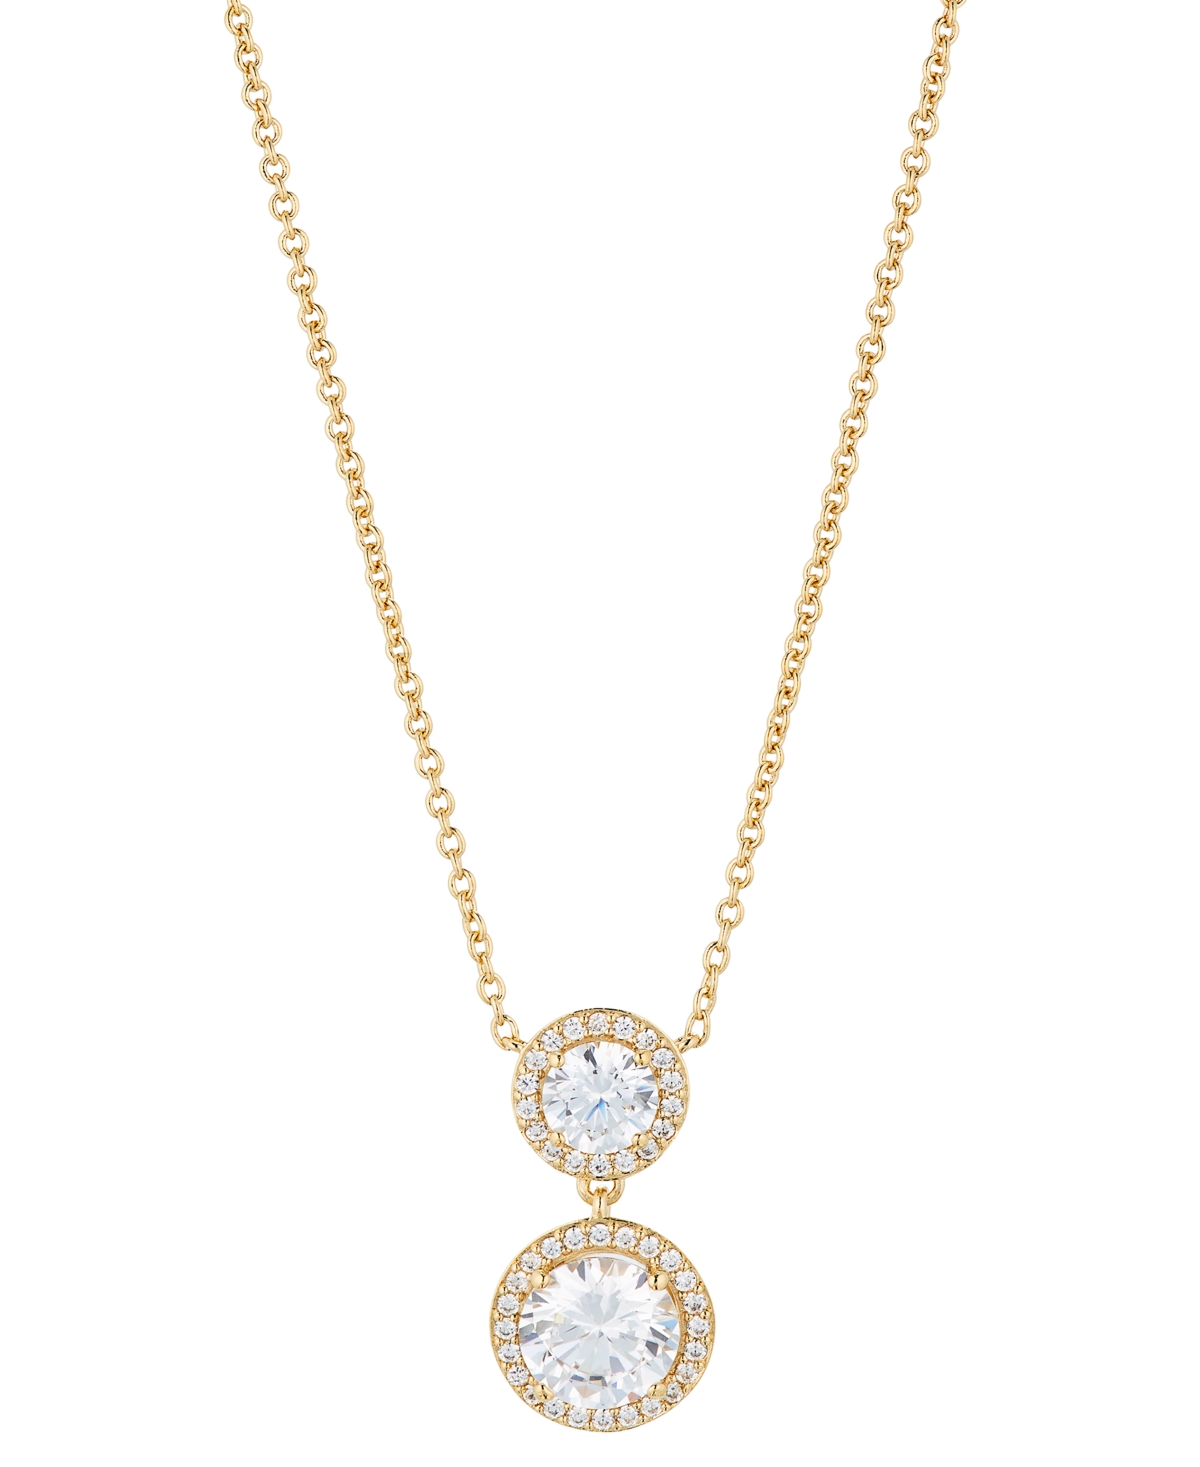 Eliot Danori Gold-tone Cubic Zirconia Round Halo Pendant Necklace, 16" + 2" Extender, Created For Macy's